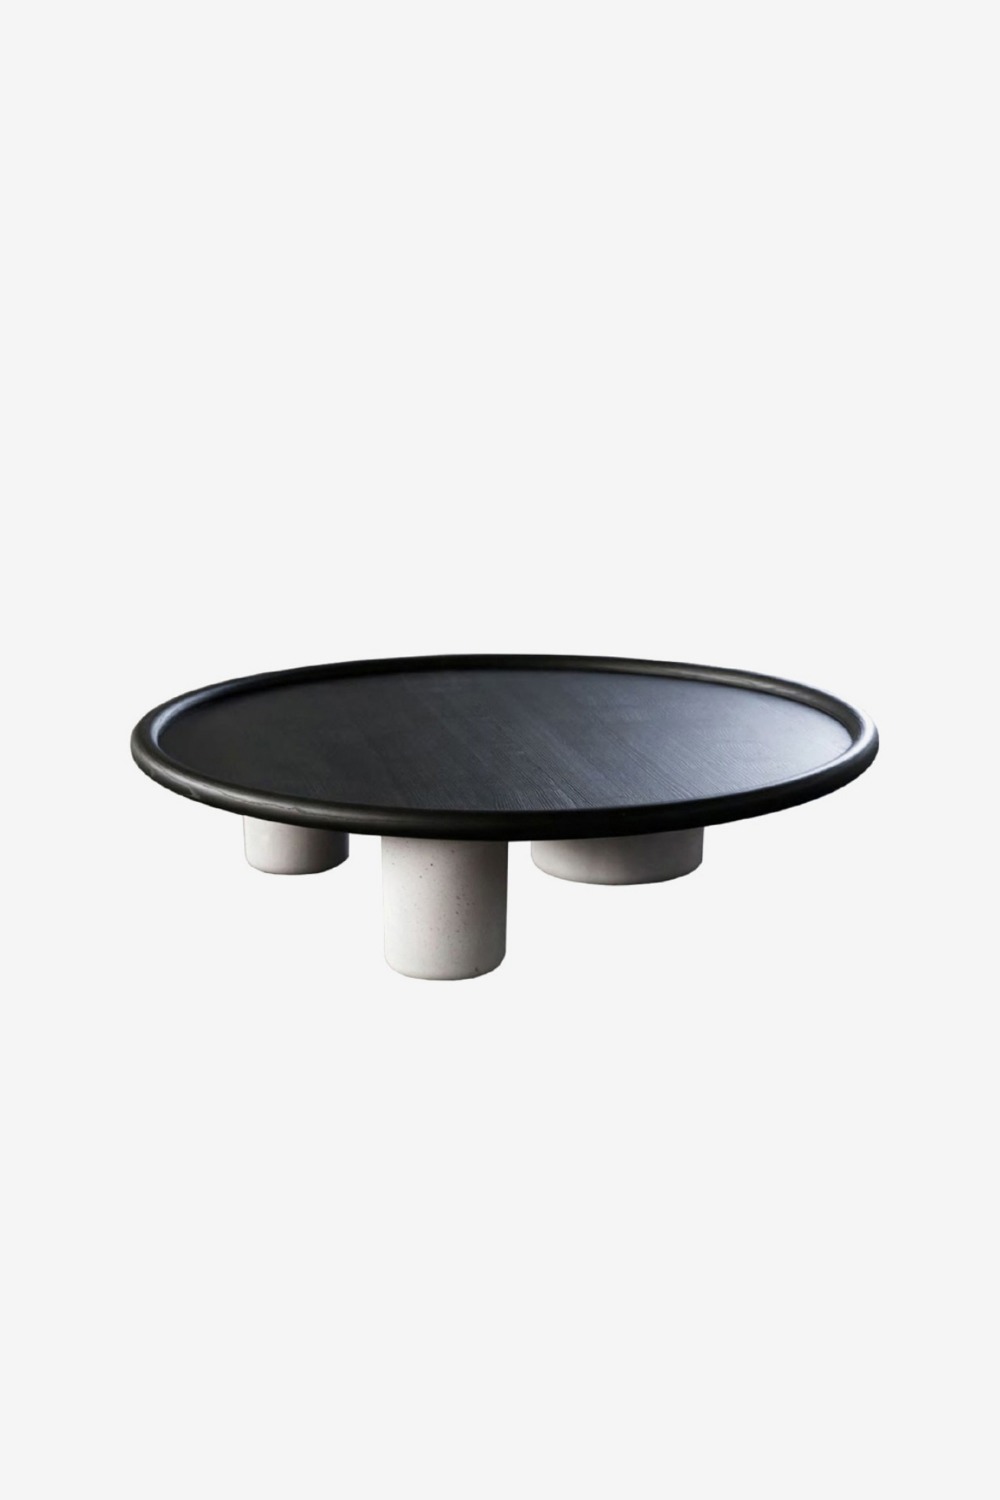 [Tacchini] Pluto Table(GREY BASE) / L